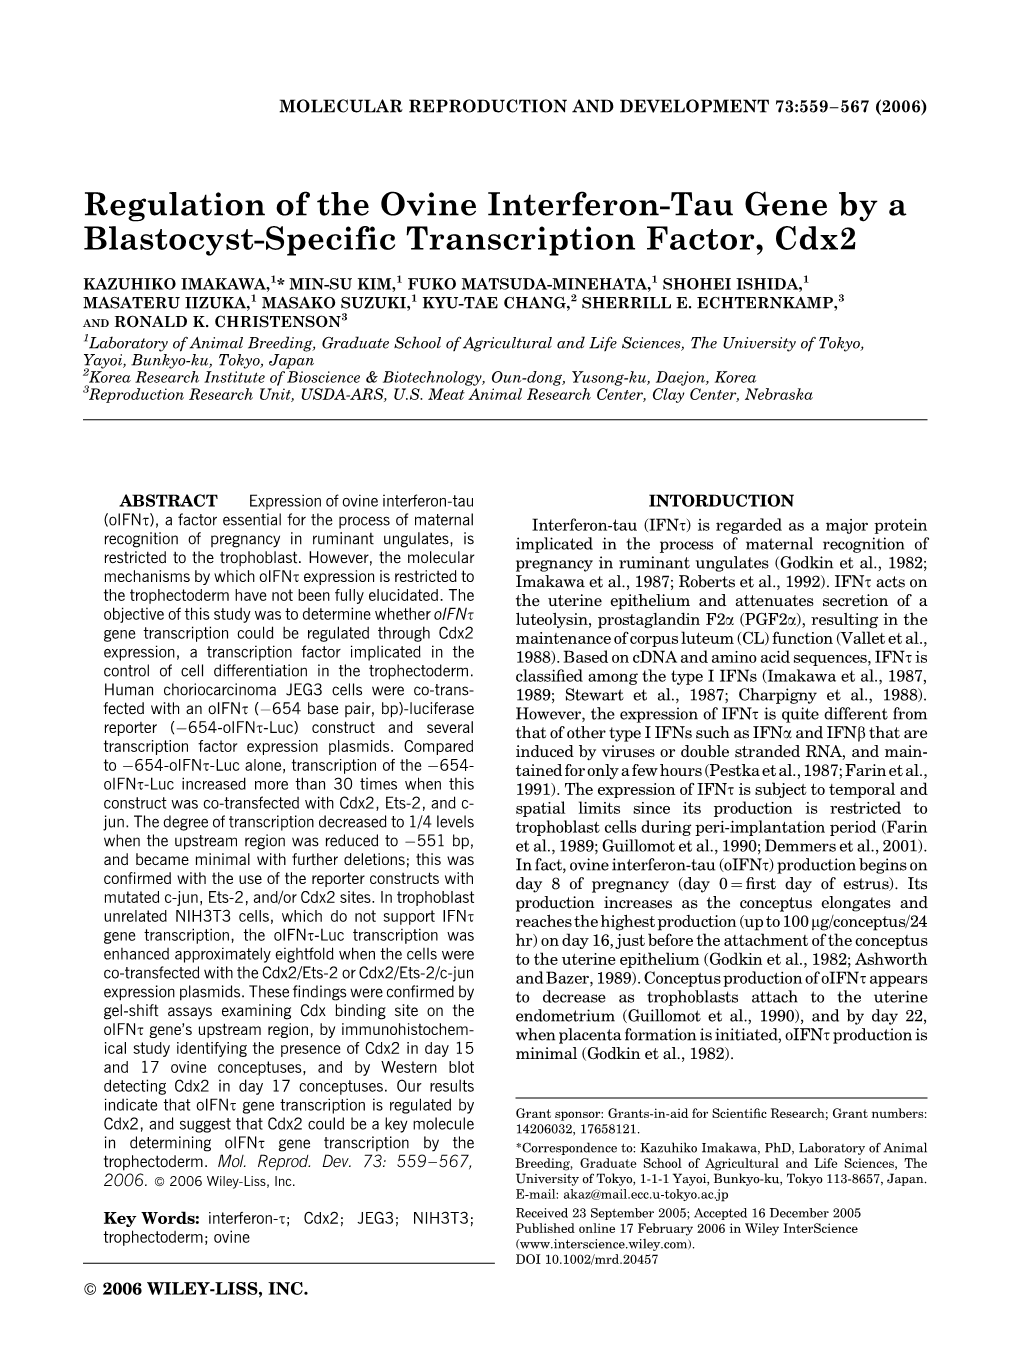 Regulation of the Ovine Interferon-Tau Gene by a Blastocyst-Specific Transcription Factor, Cdx2